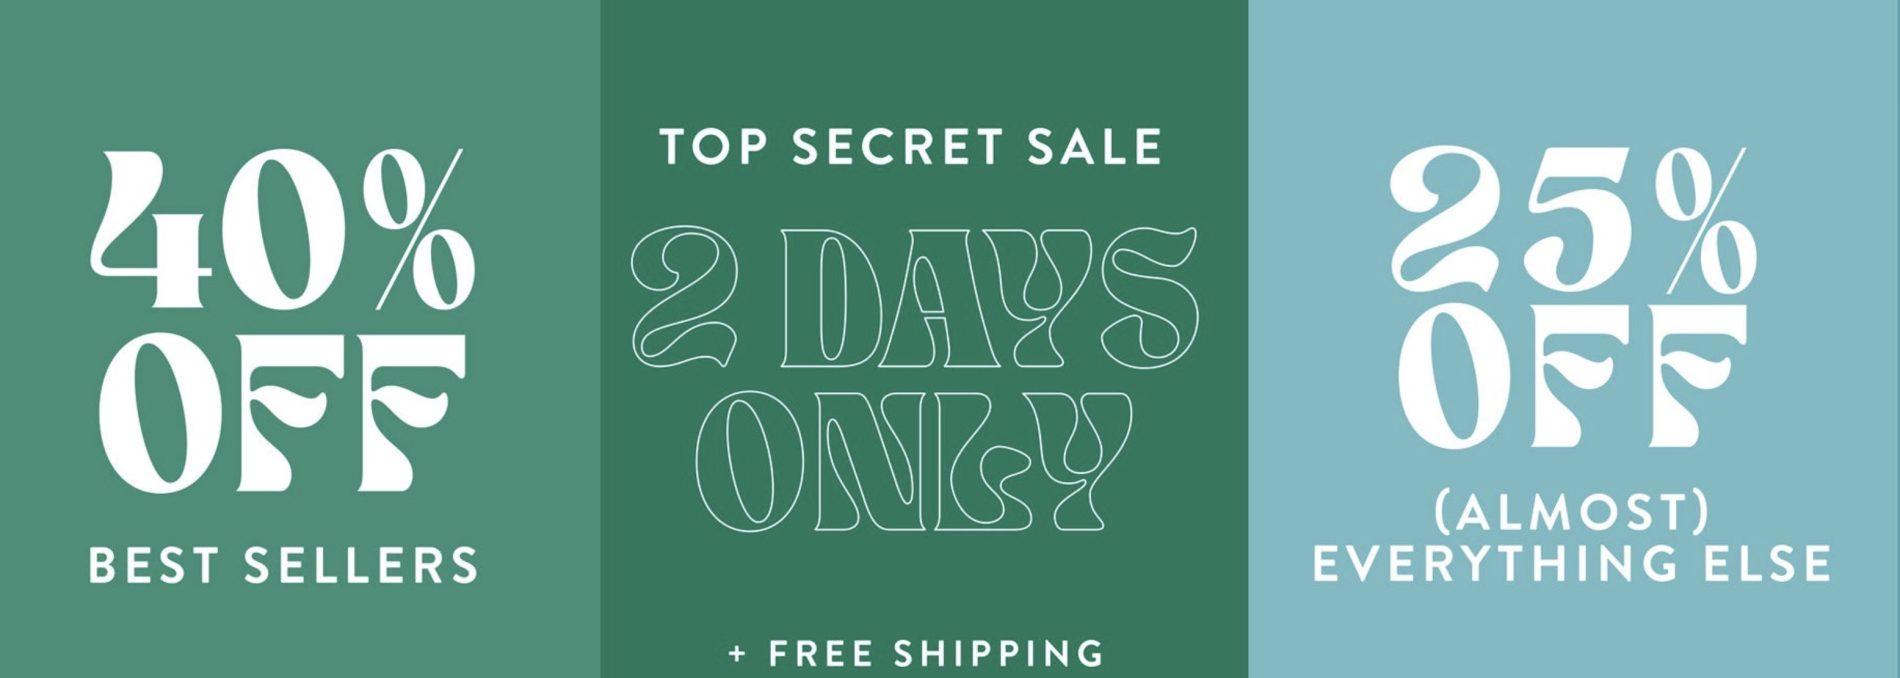 Pura Vida Secret Sale – Save 40% off Best Sellers + Free Shipping!